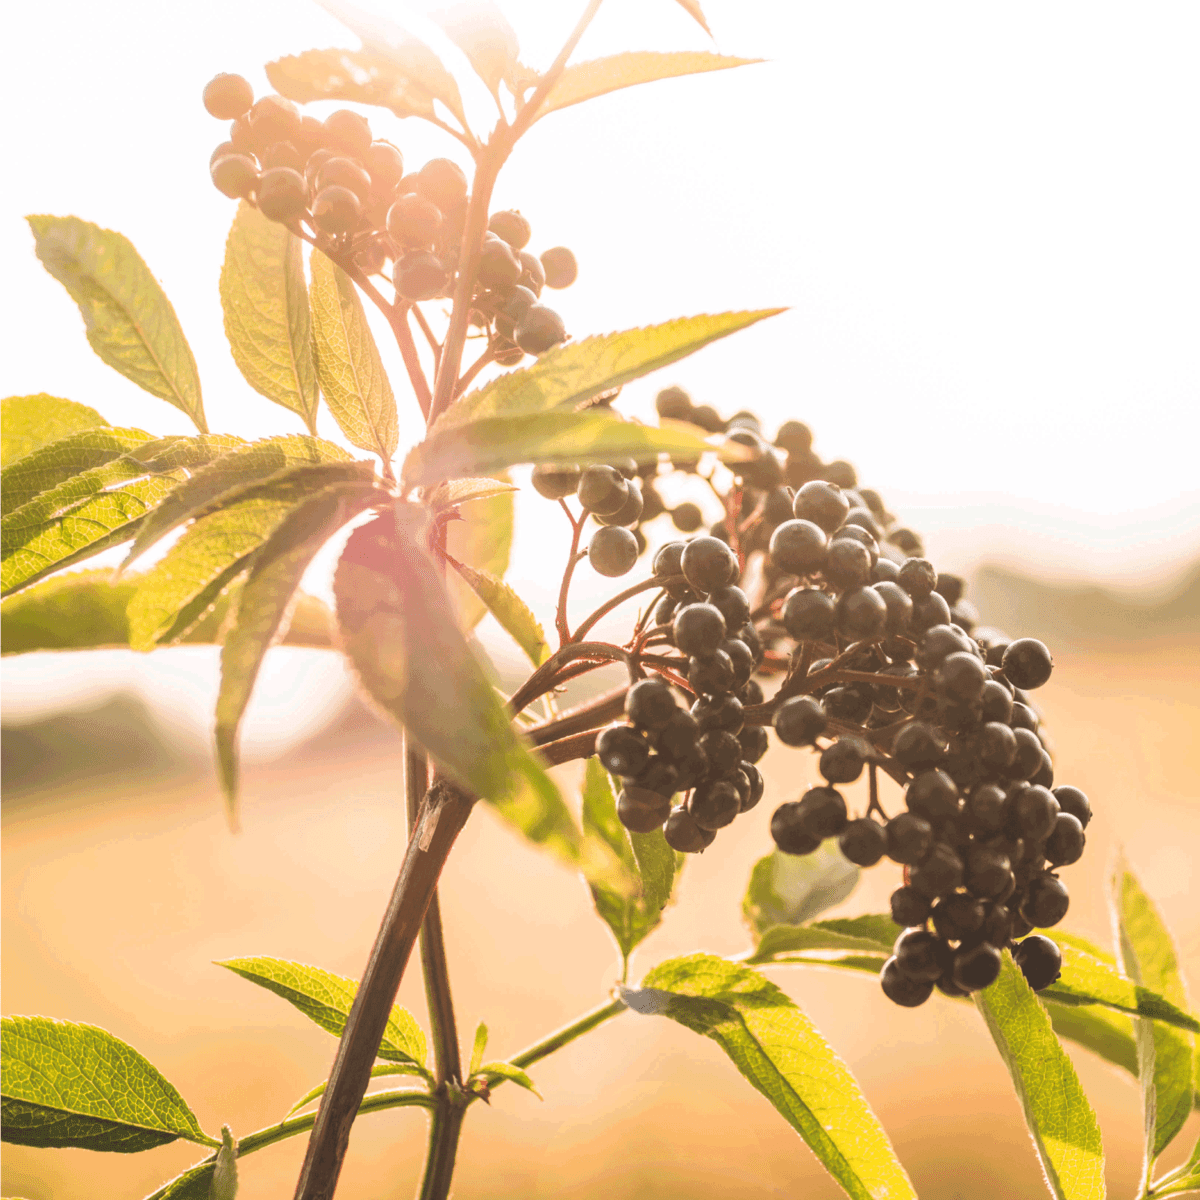 Clusters fruit black elderberry in garden in sun light (Sambucus nigra). elder, black elder, European black elderberry background